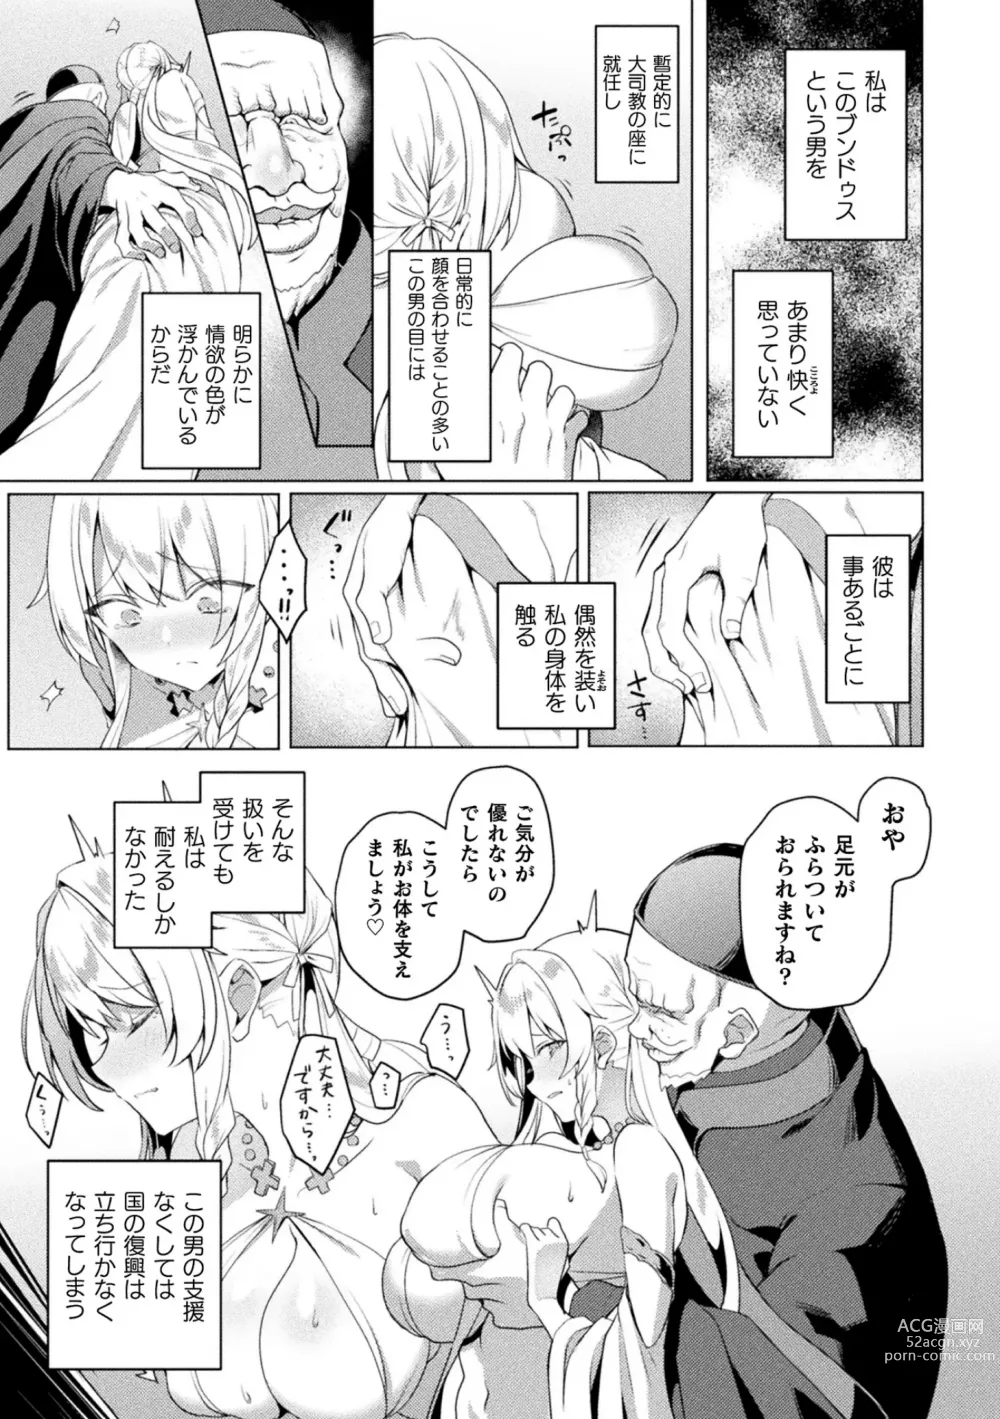 Page 9 of manga Kukkoro Heroines Vol. 31